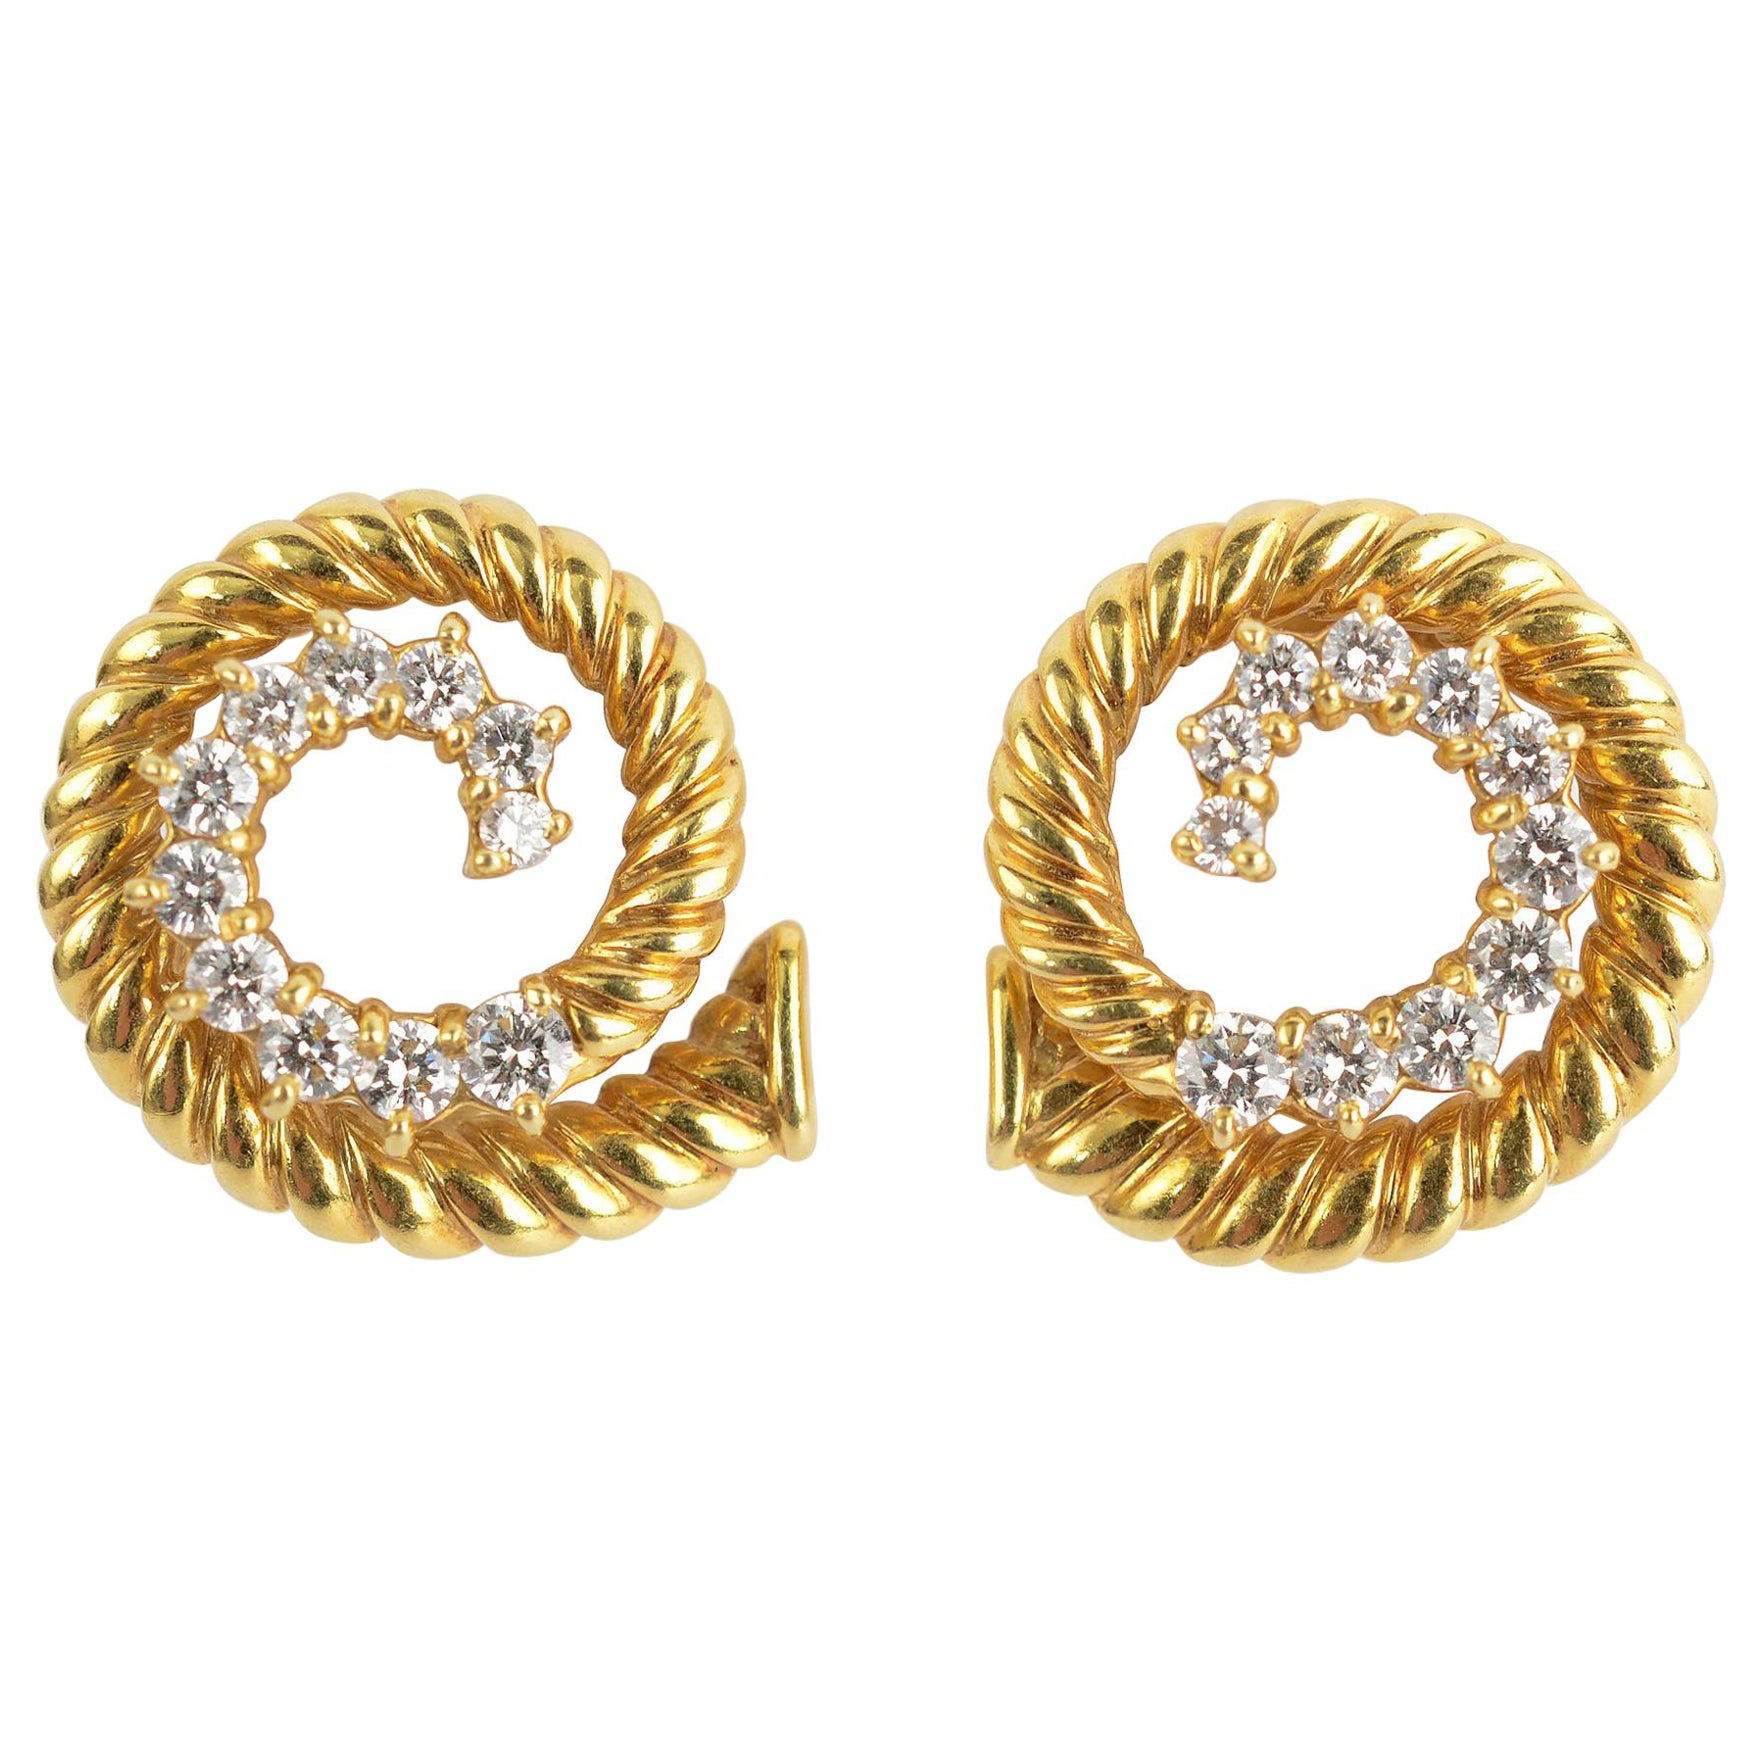 Jean Vitau Gold and Diamond Coil Earrings